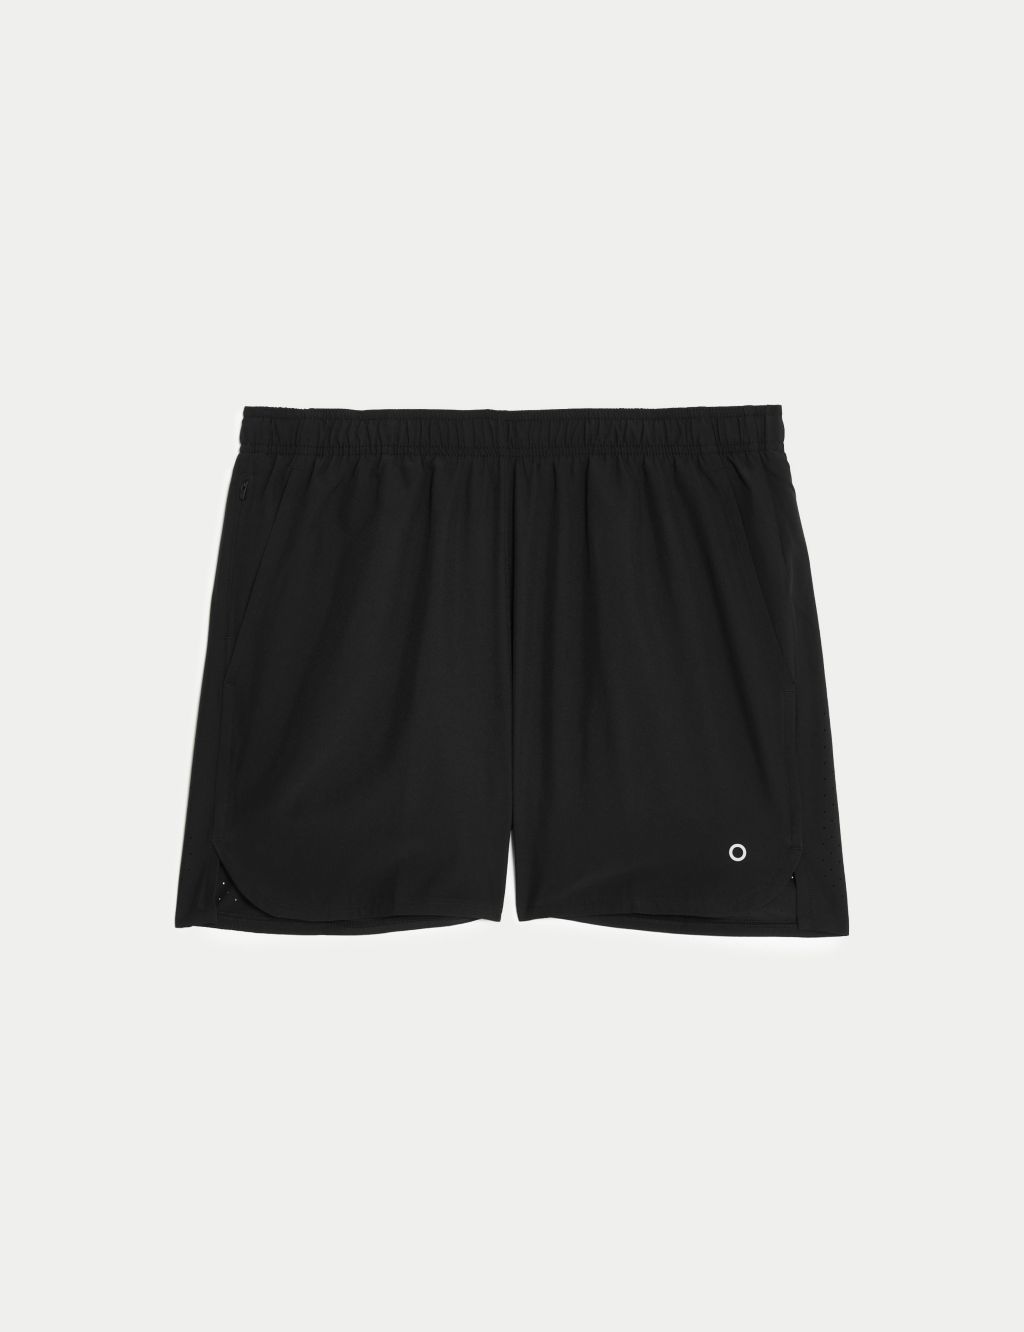 Zip Pocket Running Shorts image 2